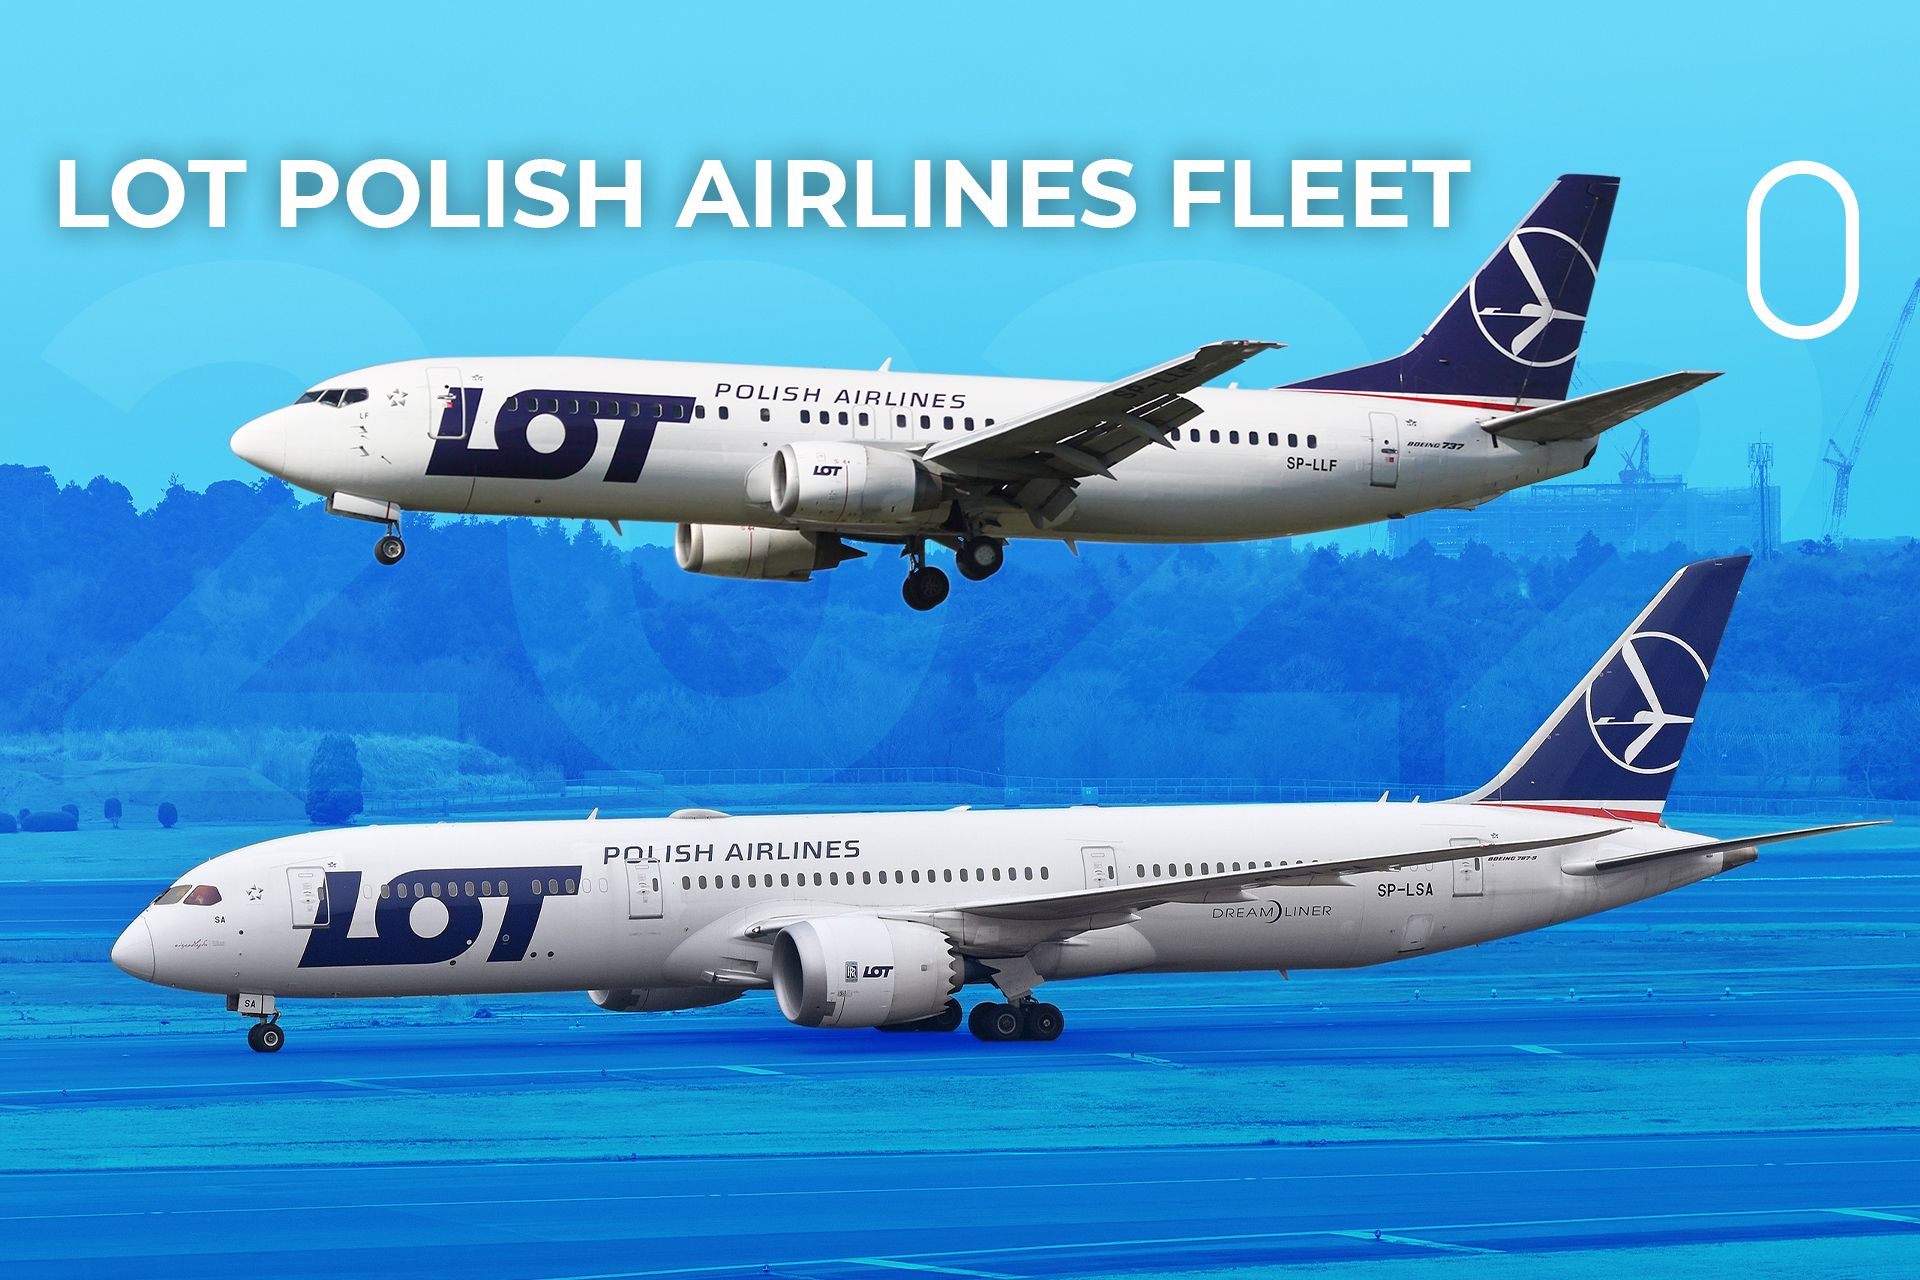 Lot (авиакомпания). Lot Polish Airlines флот. ITA авиакомпания. Lot polish airlines